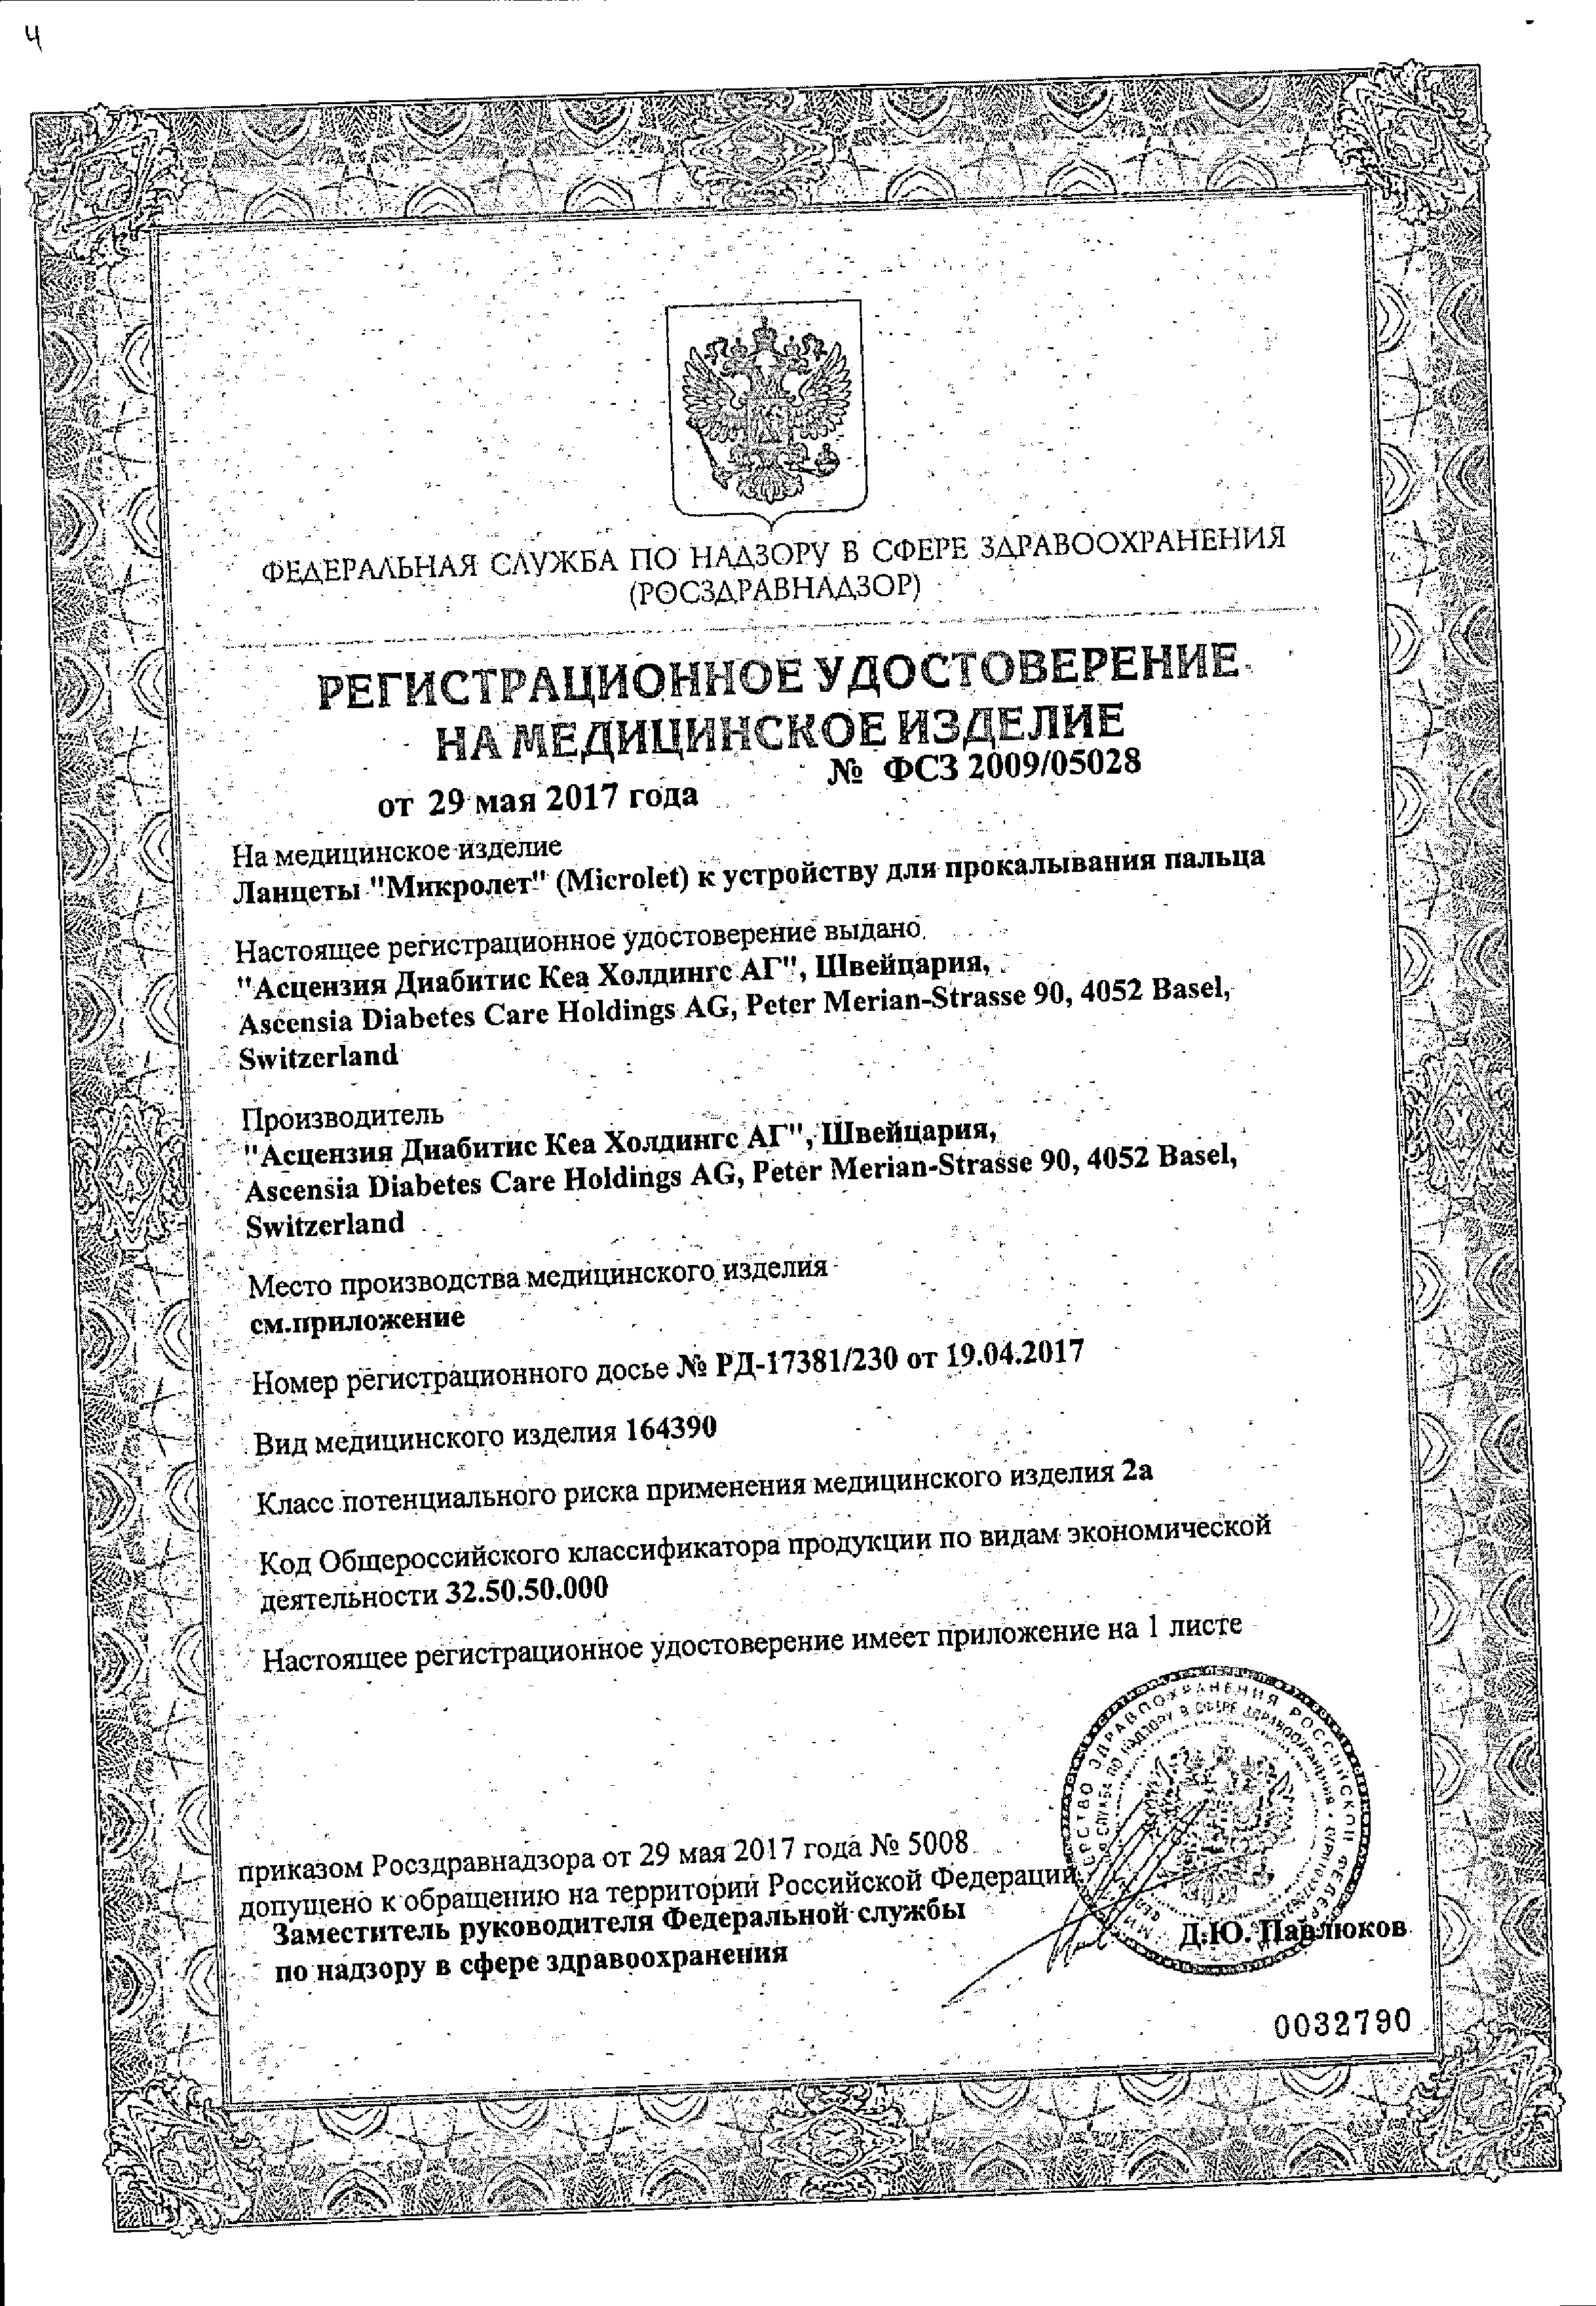 Microlet ланцеты сертификат